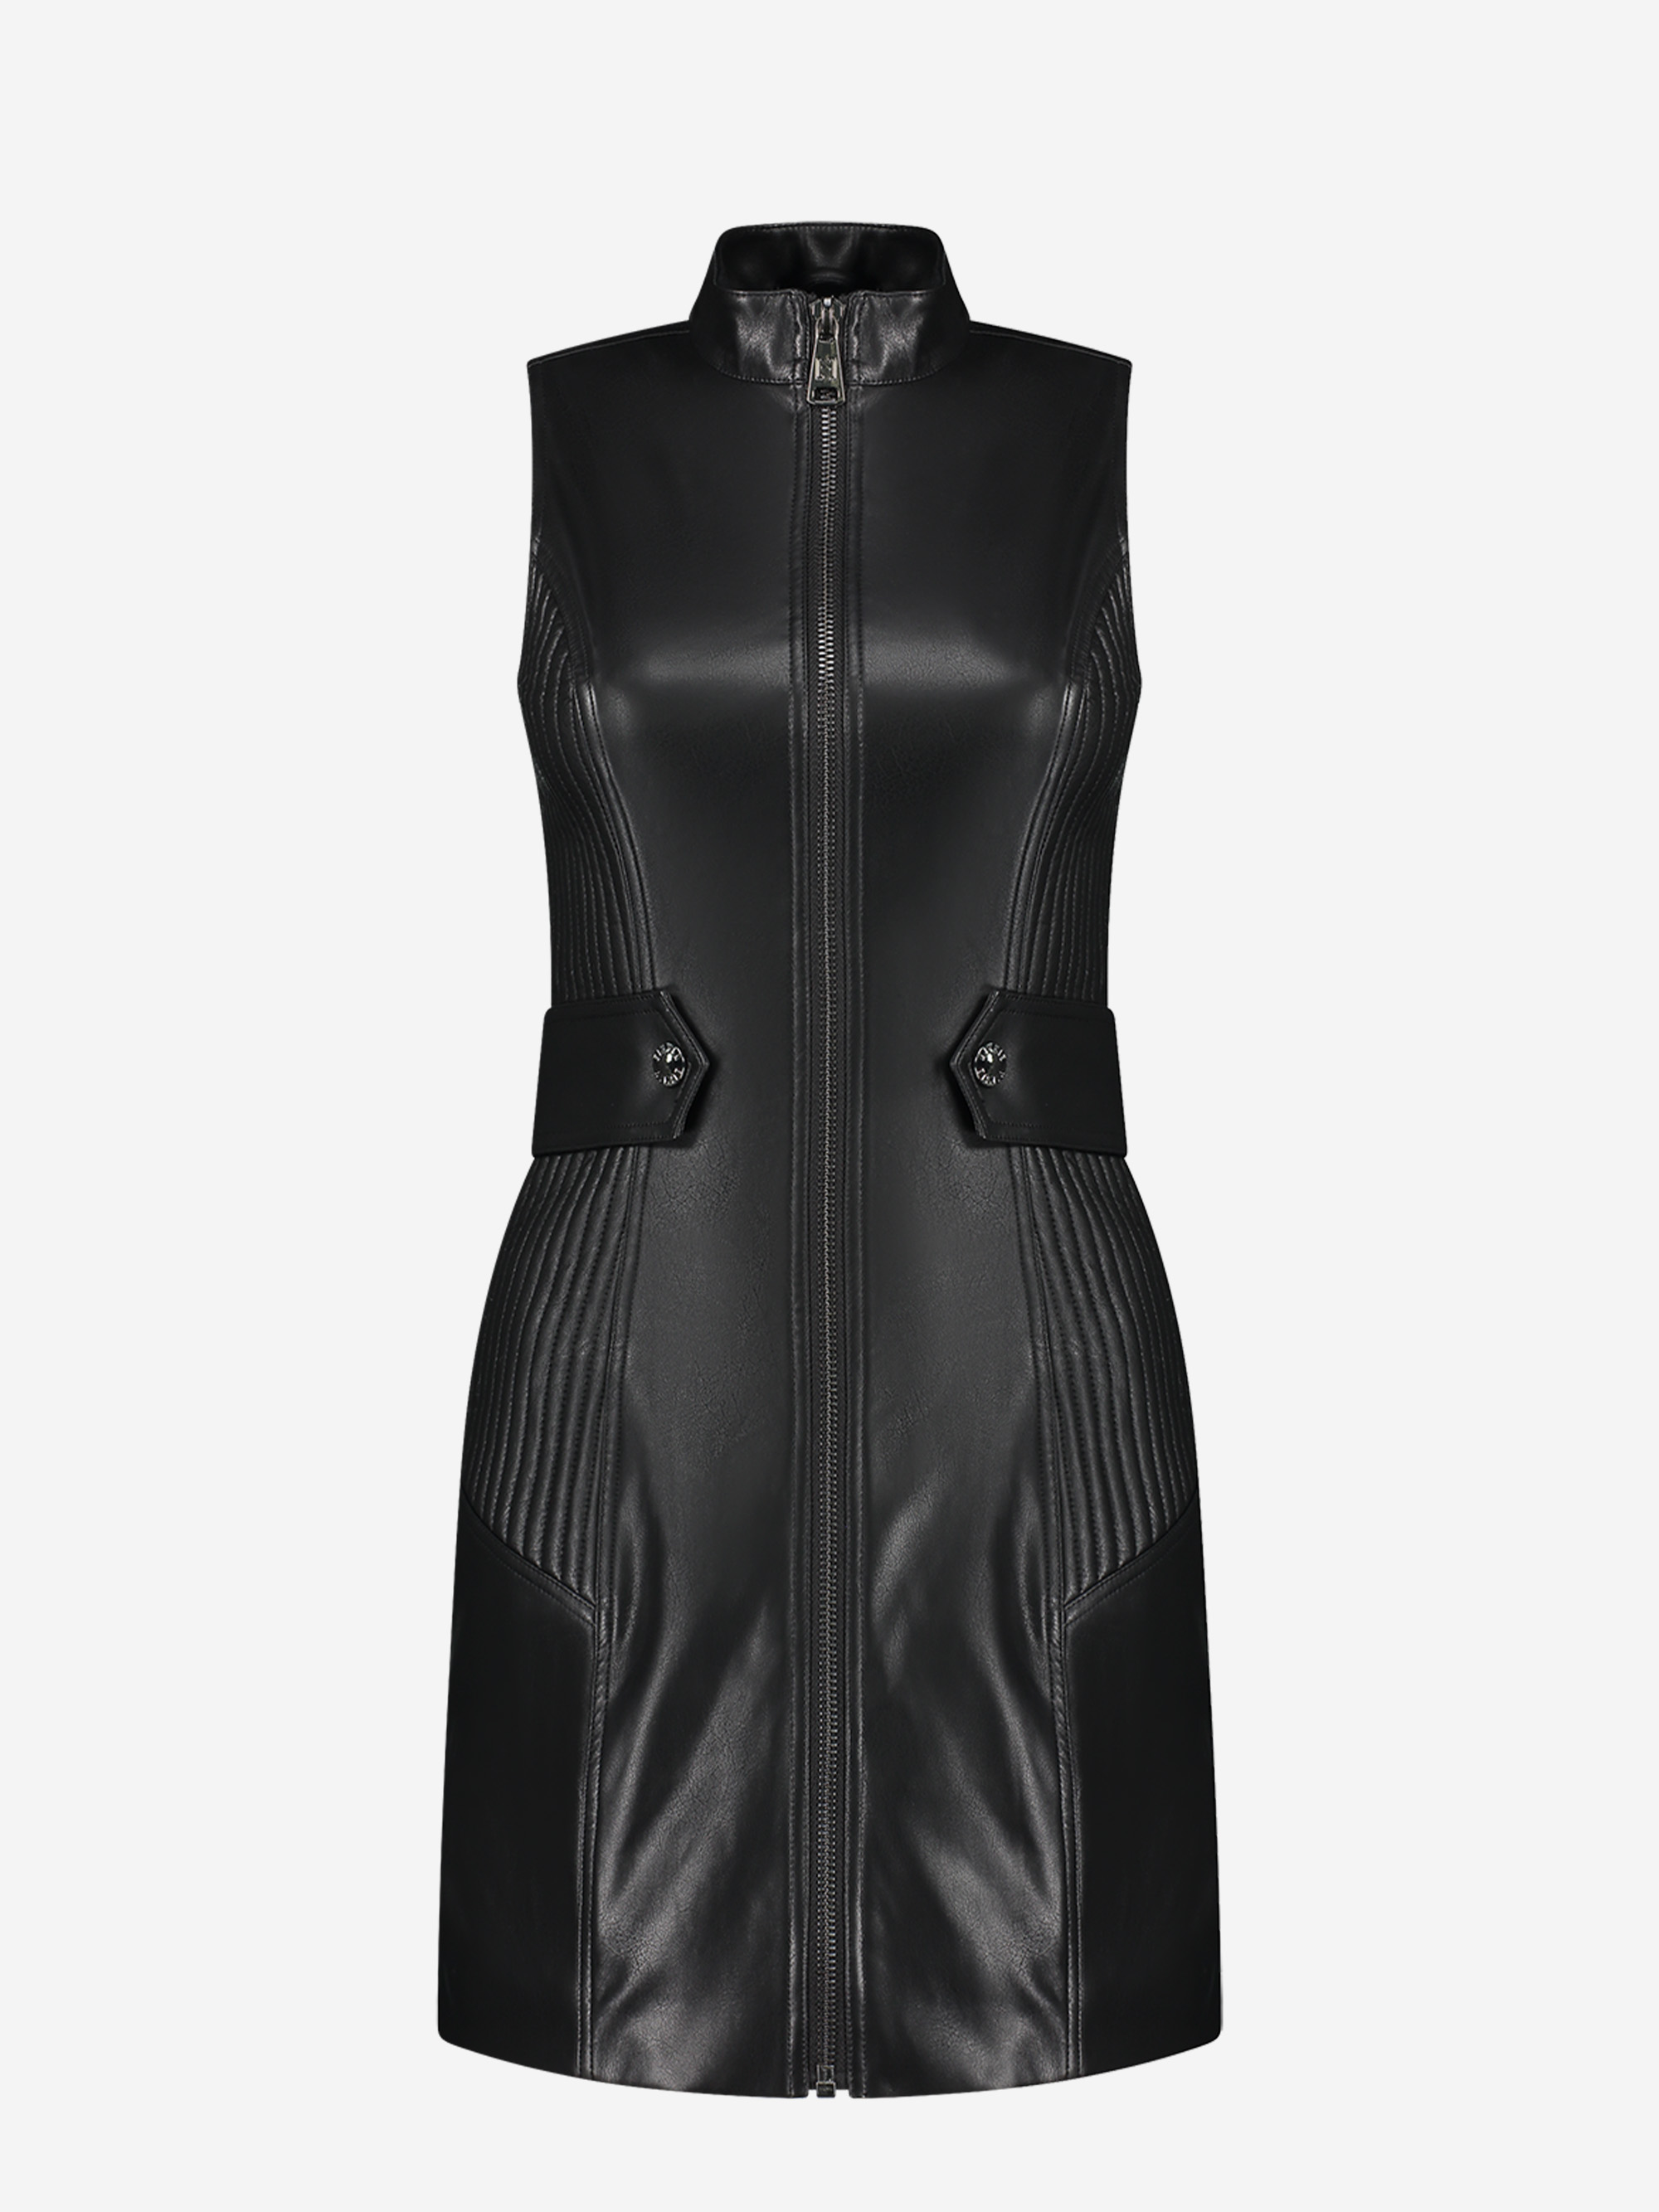 Sleeveless vegan leather dress